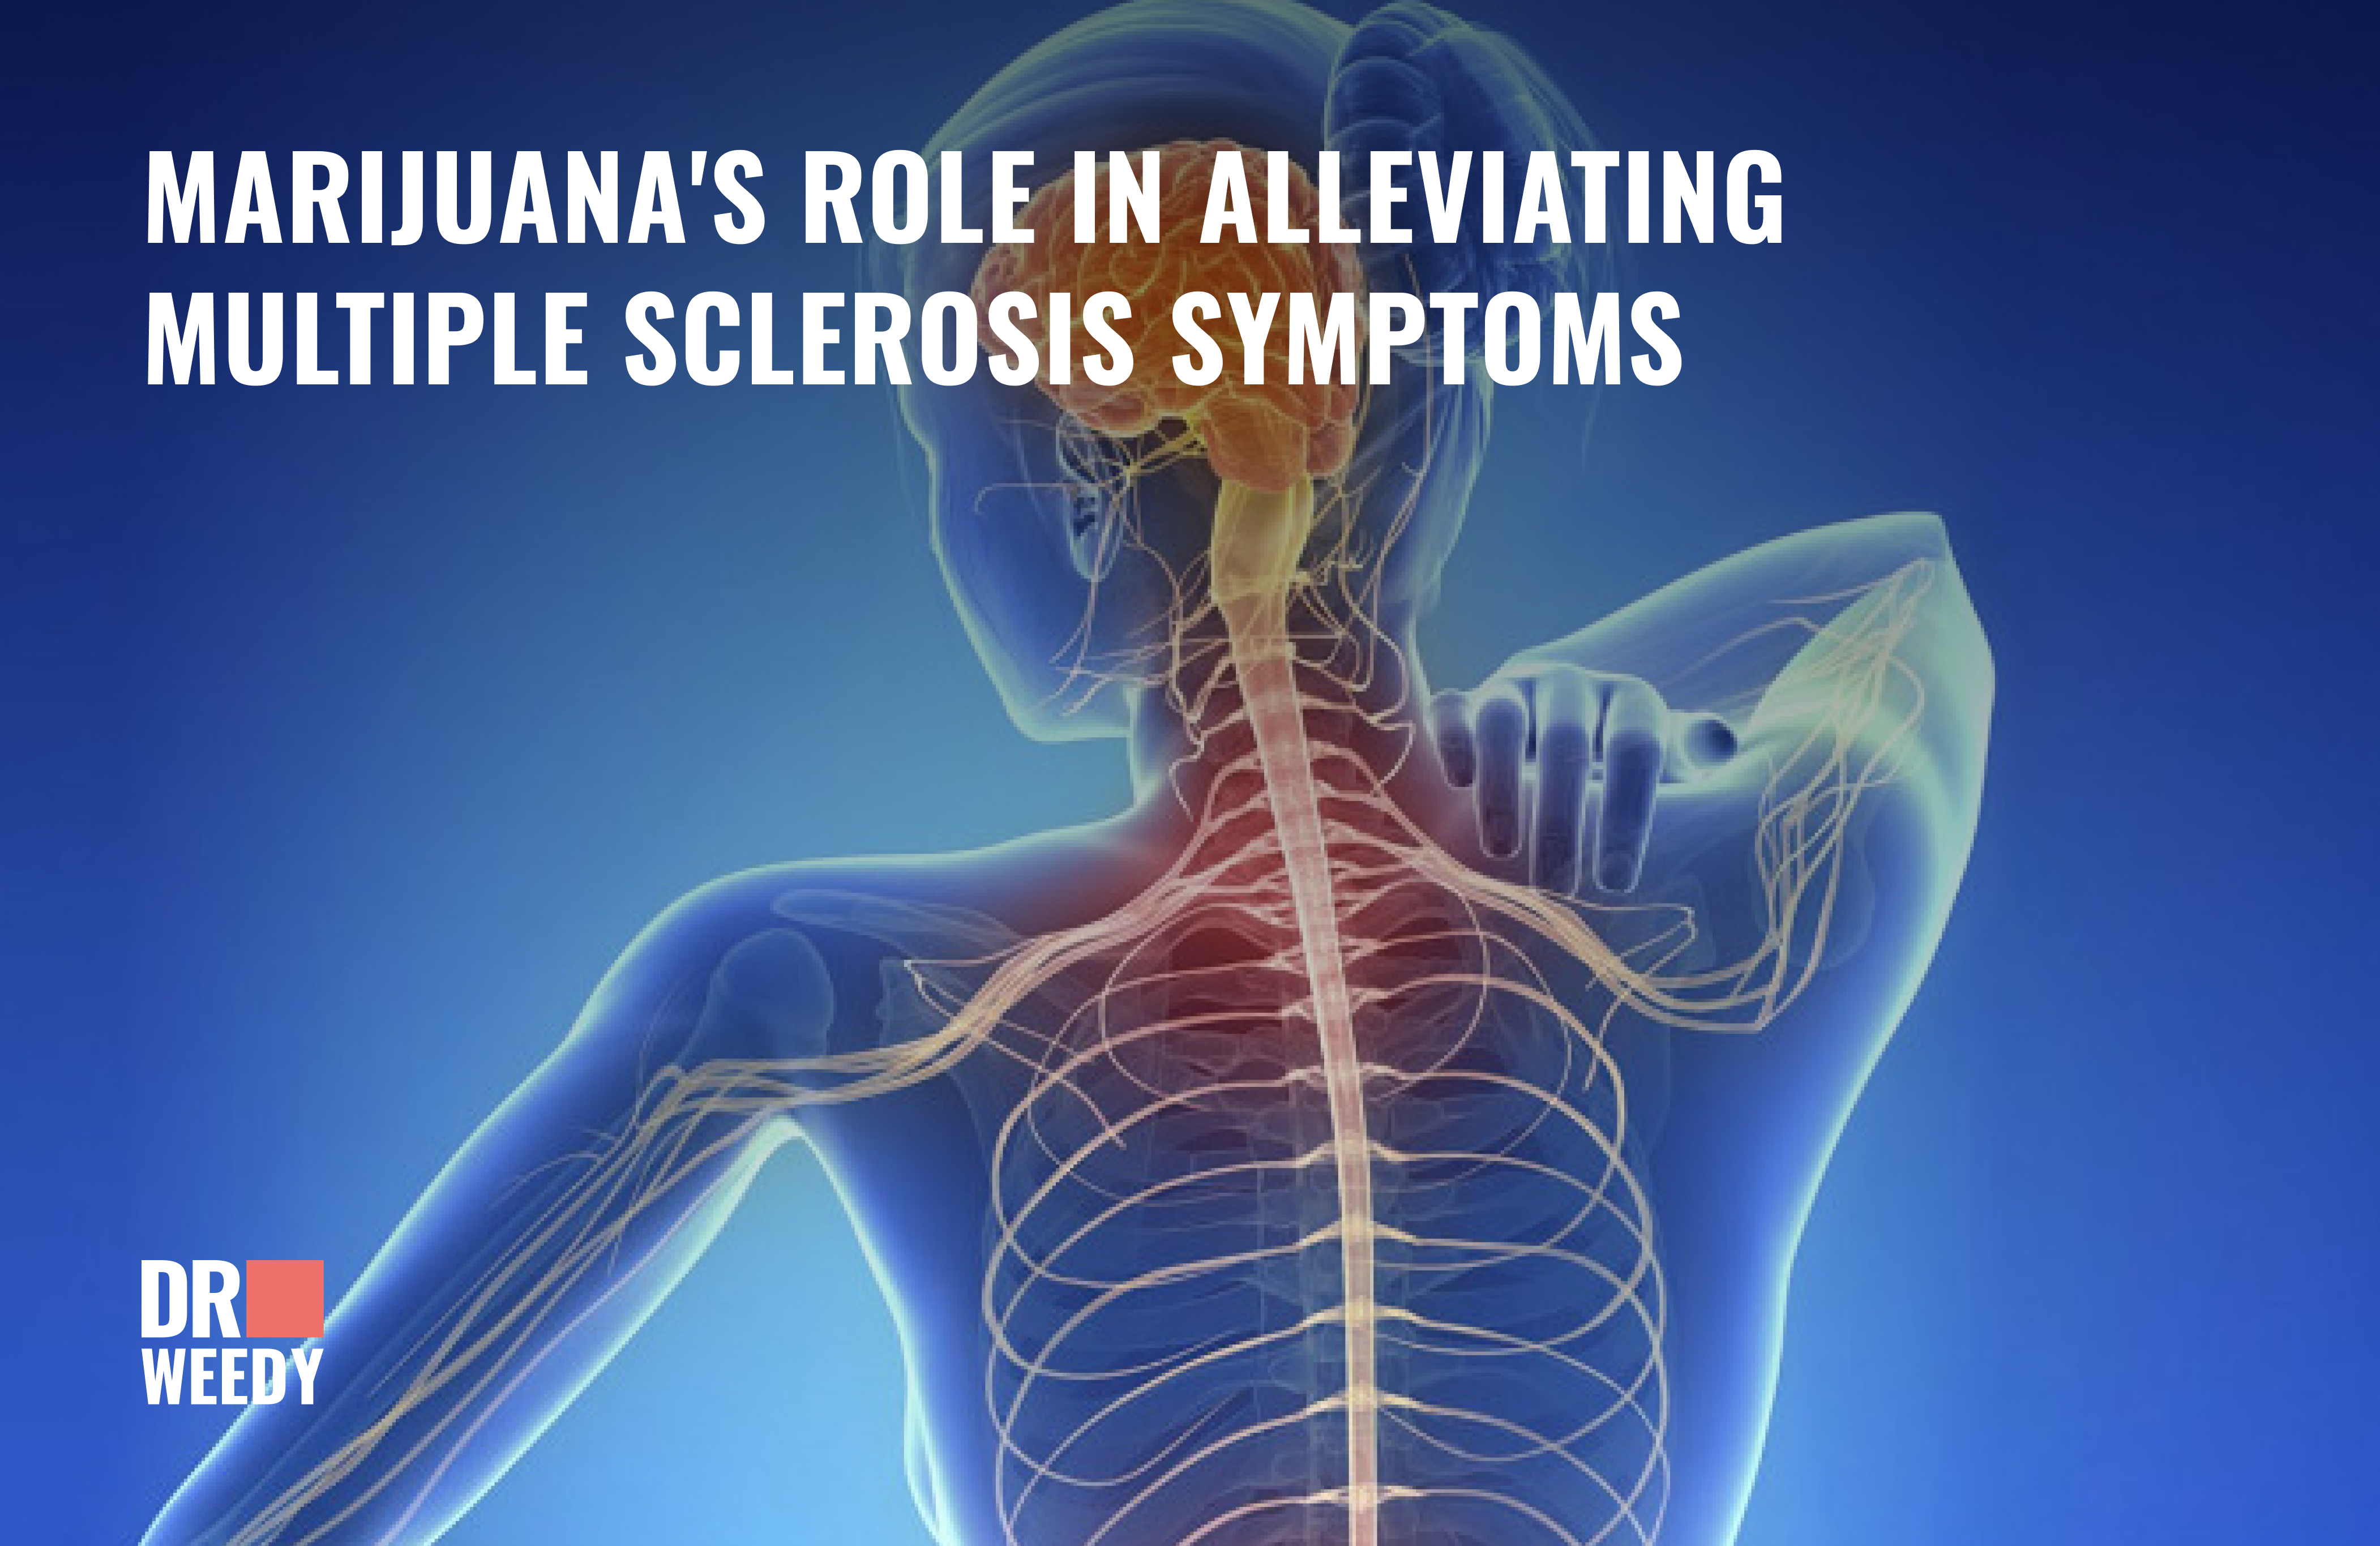 Marijuana's Role in Alleviating Multiple Sclerosis Symptoms